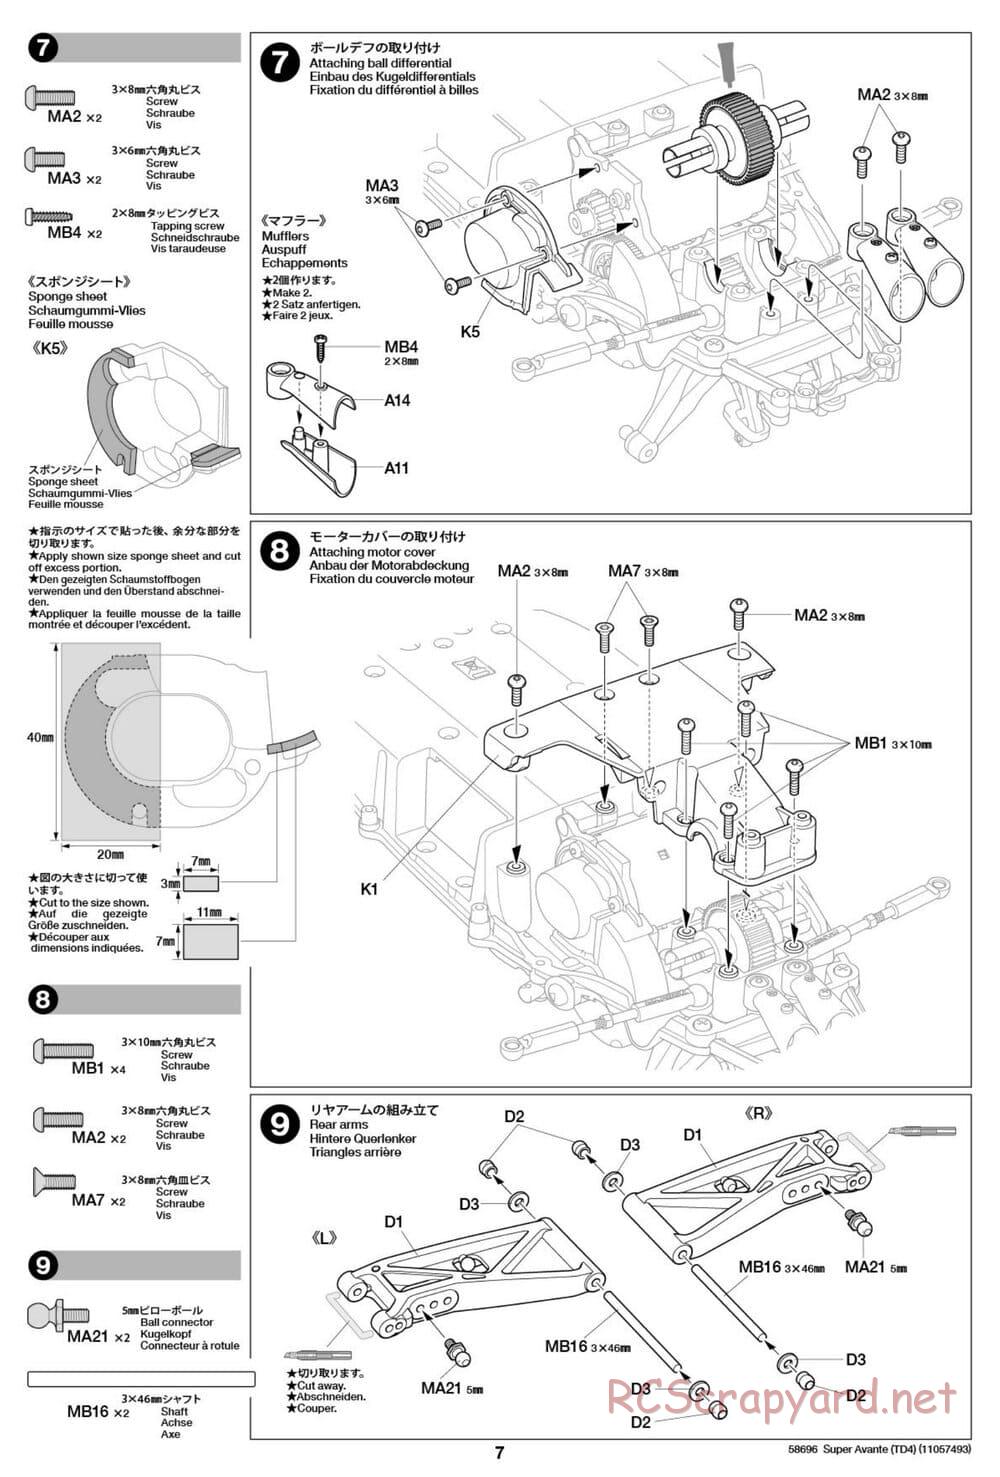 Tamiya - Super Avante - TD4 Chassis - Manual - Page 8